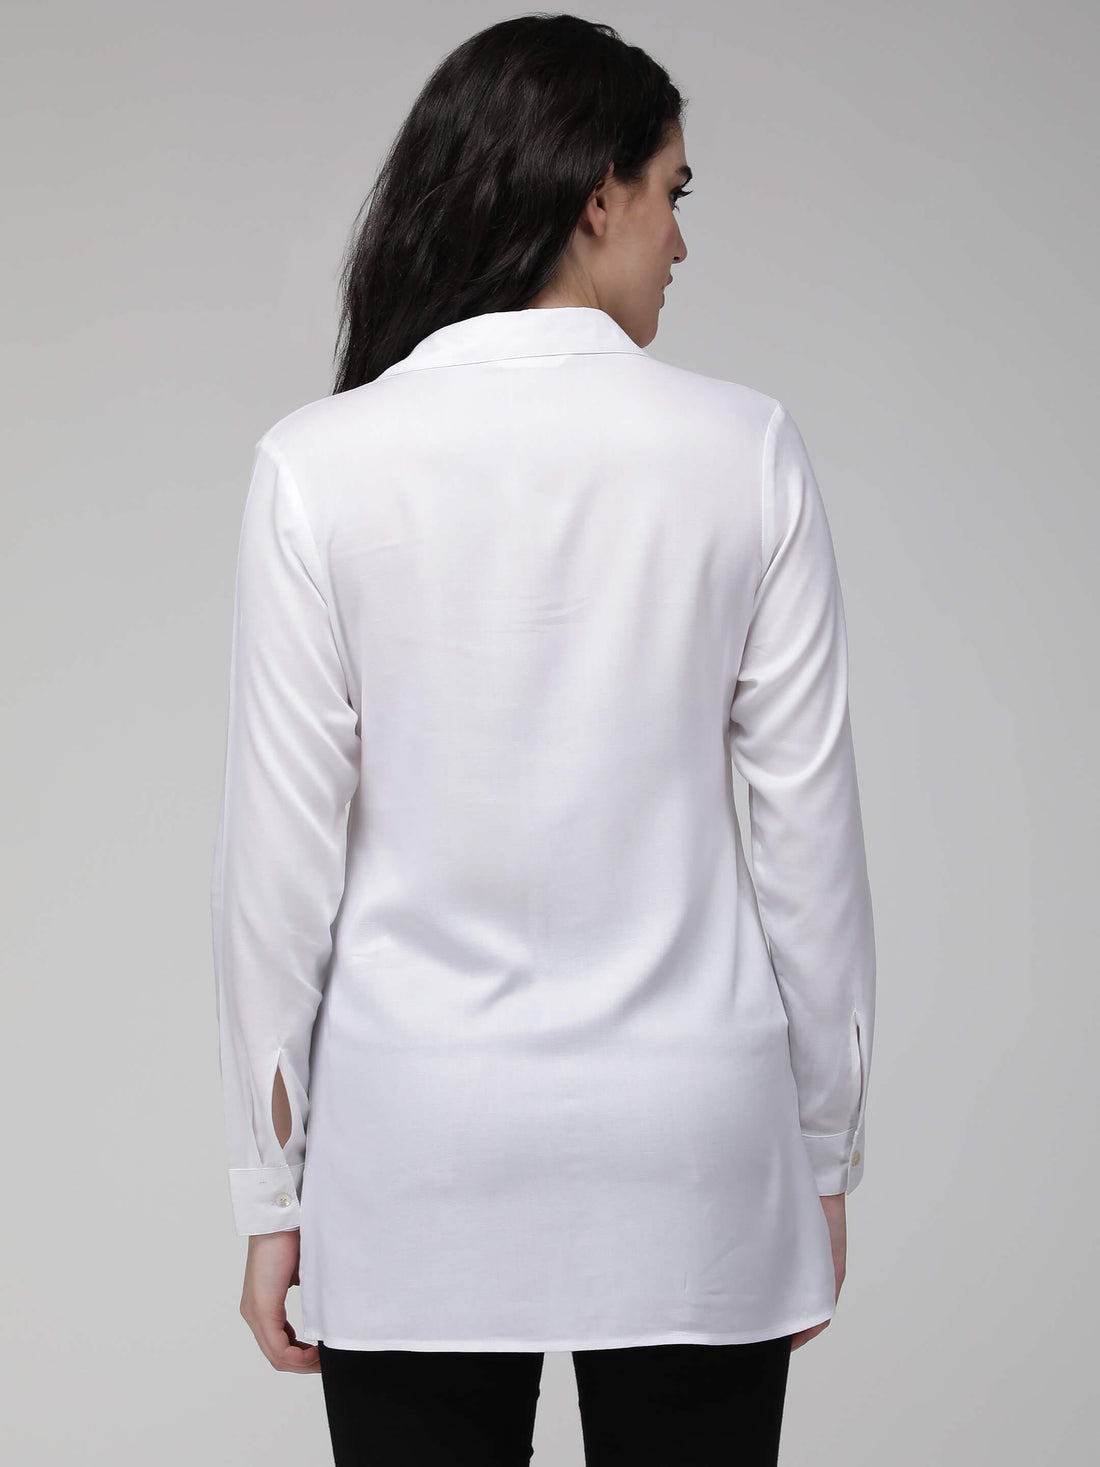 White formal shirt